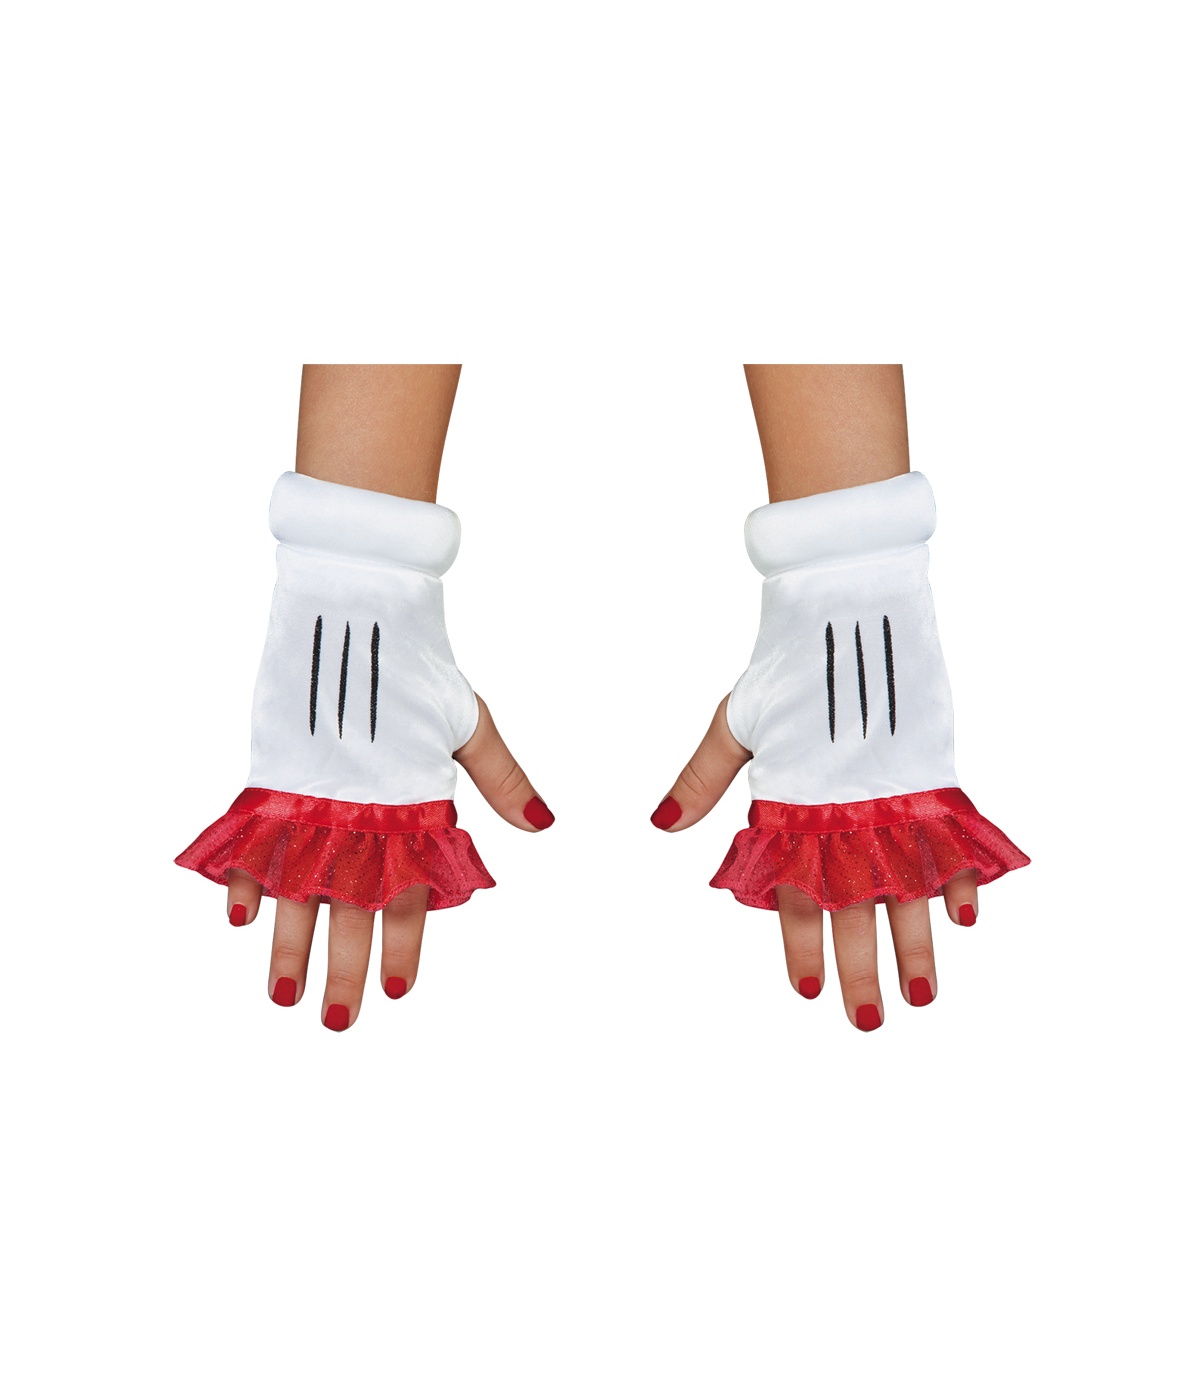  Girls Minnie Mouse Glovettes